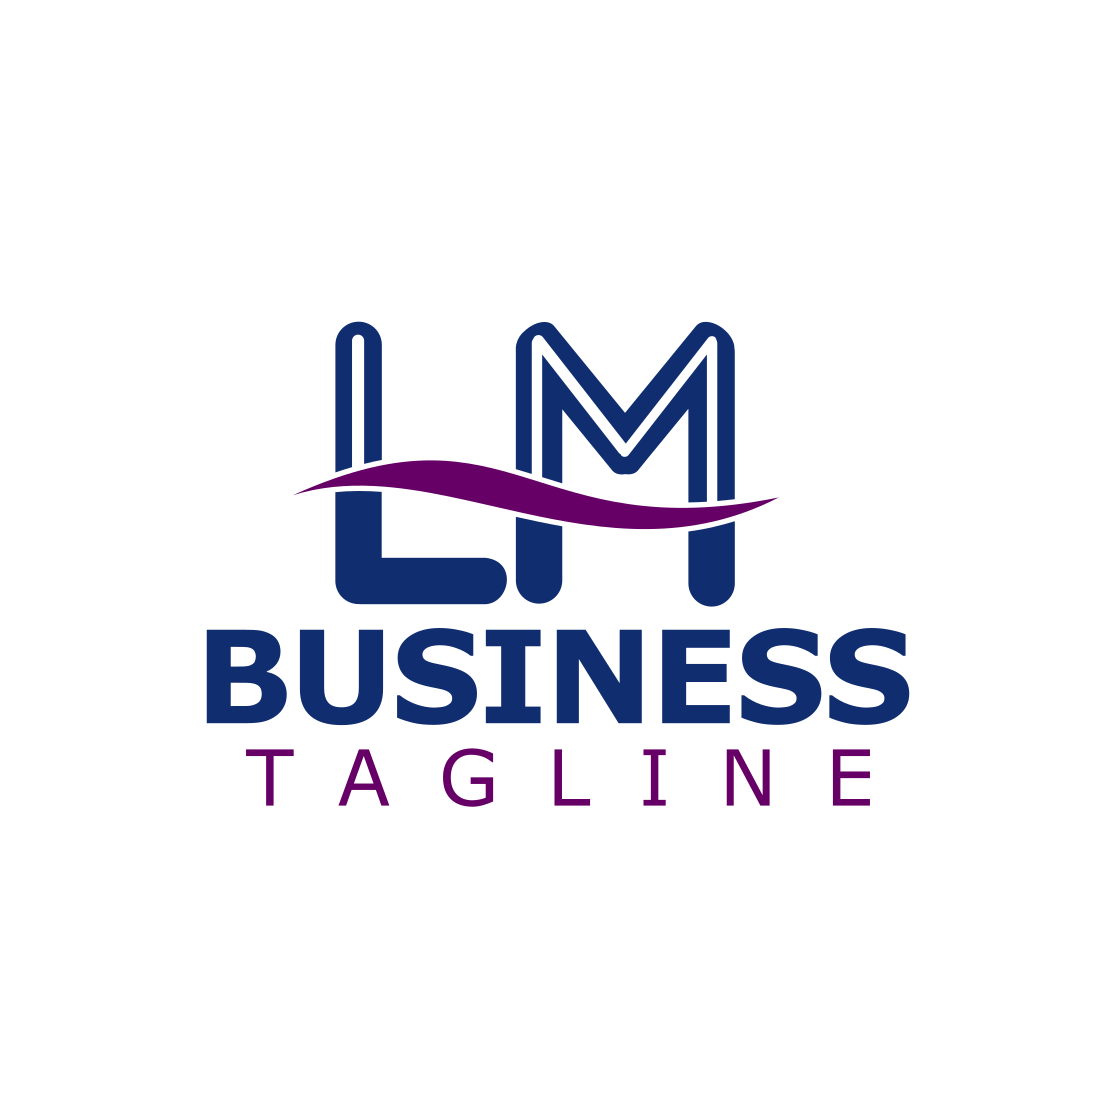 L.M Letter Initials Logo Design Template previews.